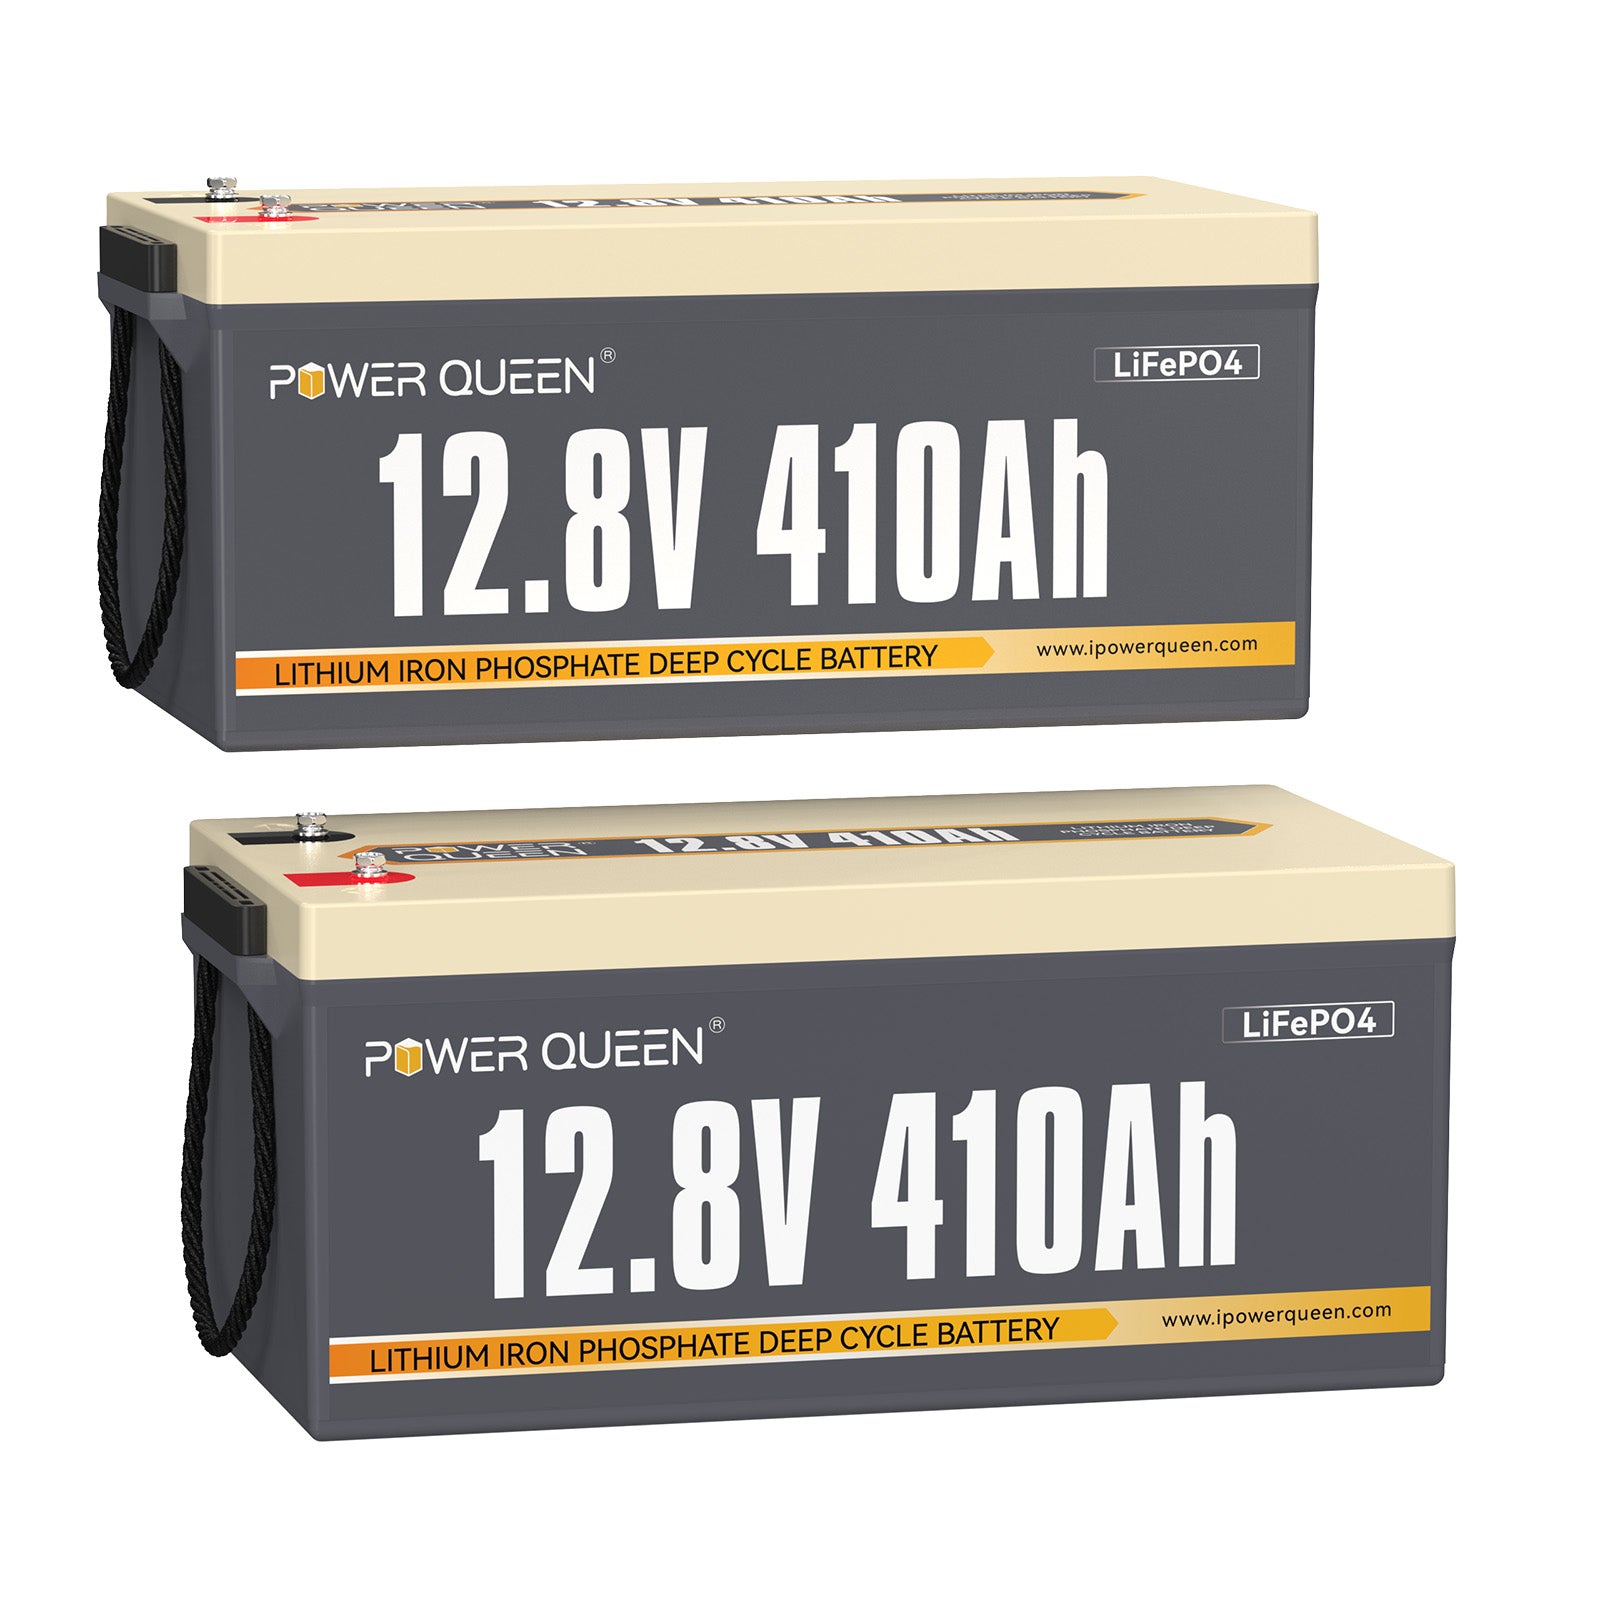 【0% BTW】Power Queen 12V 410Ah LiFePO4-batterij, ingebouwd 250A BMS